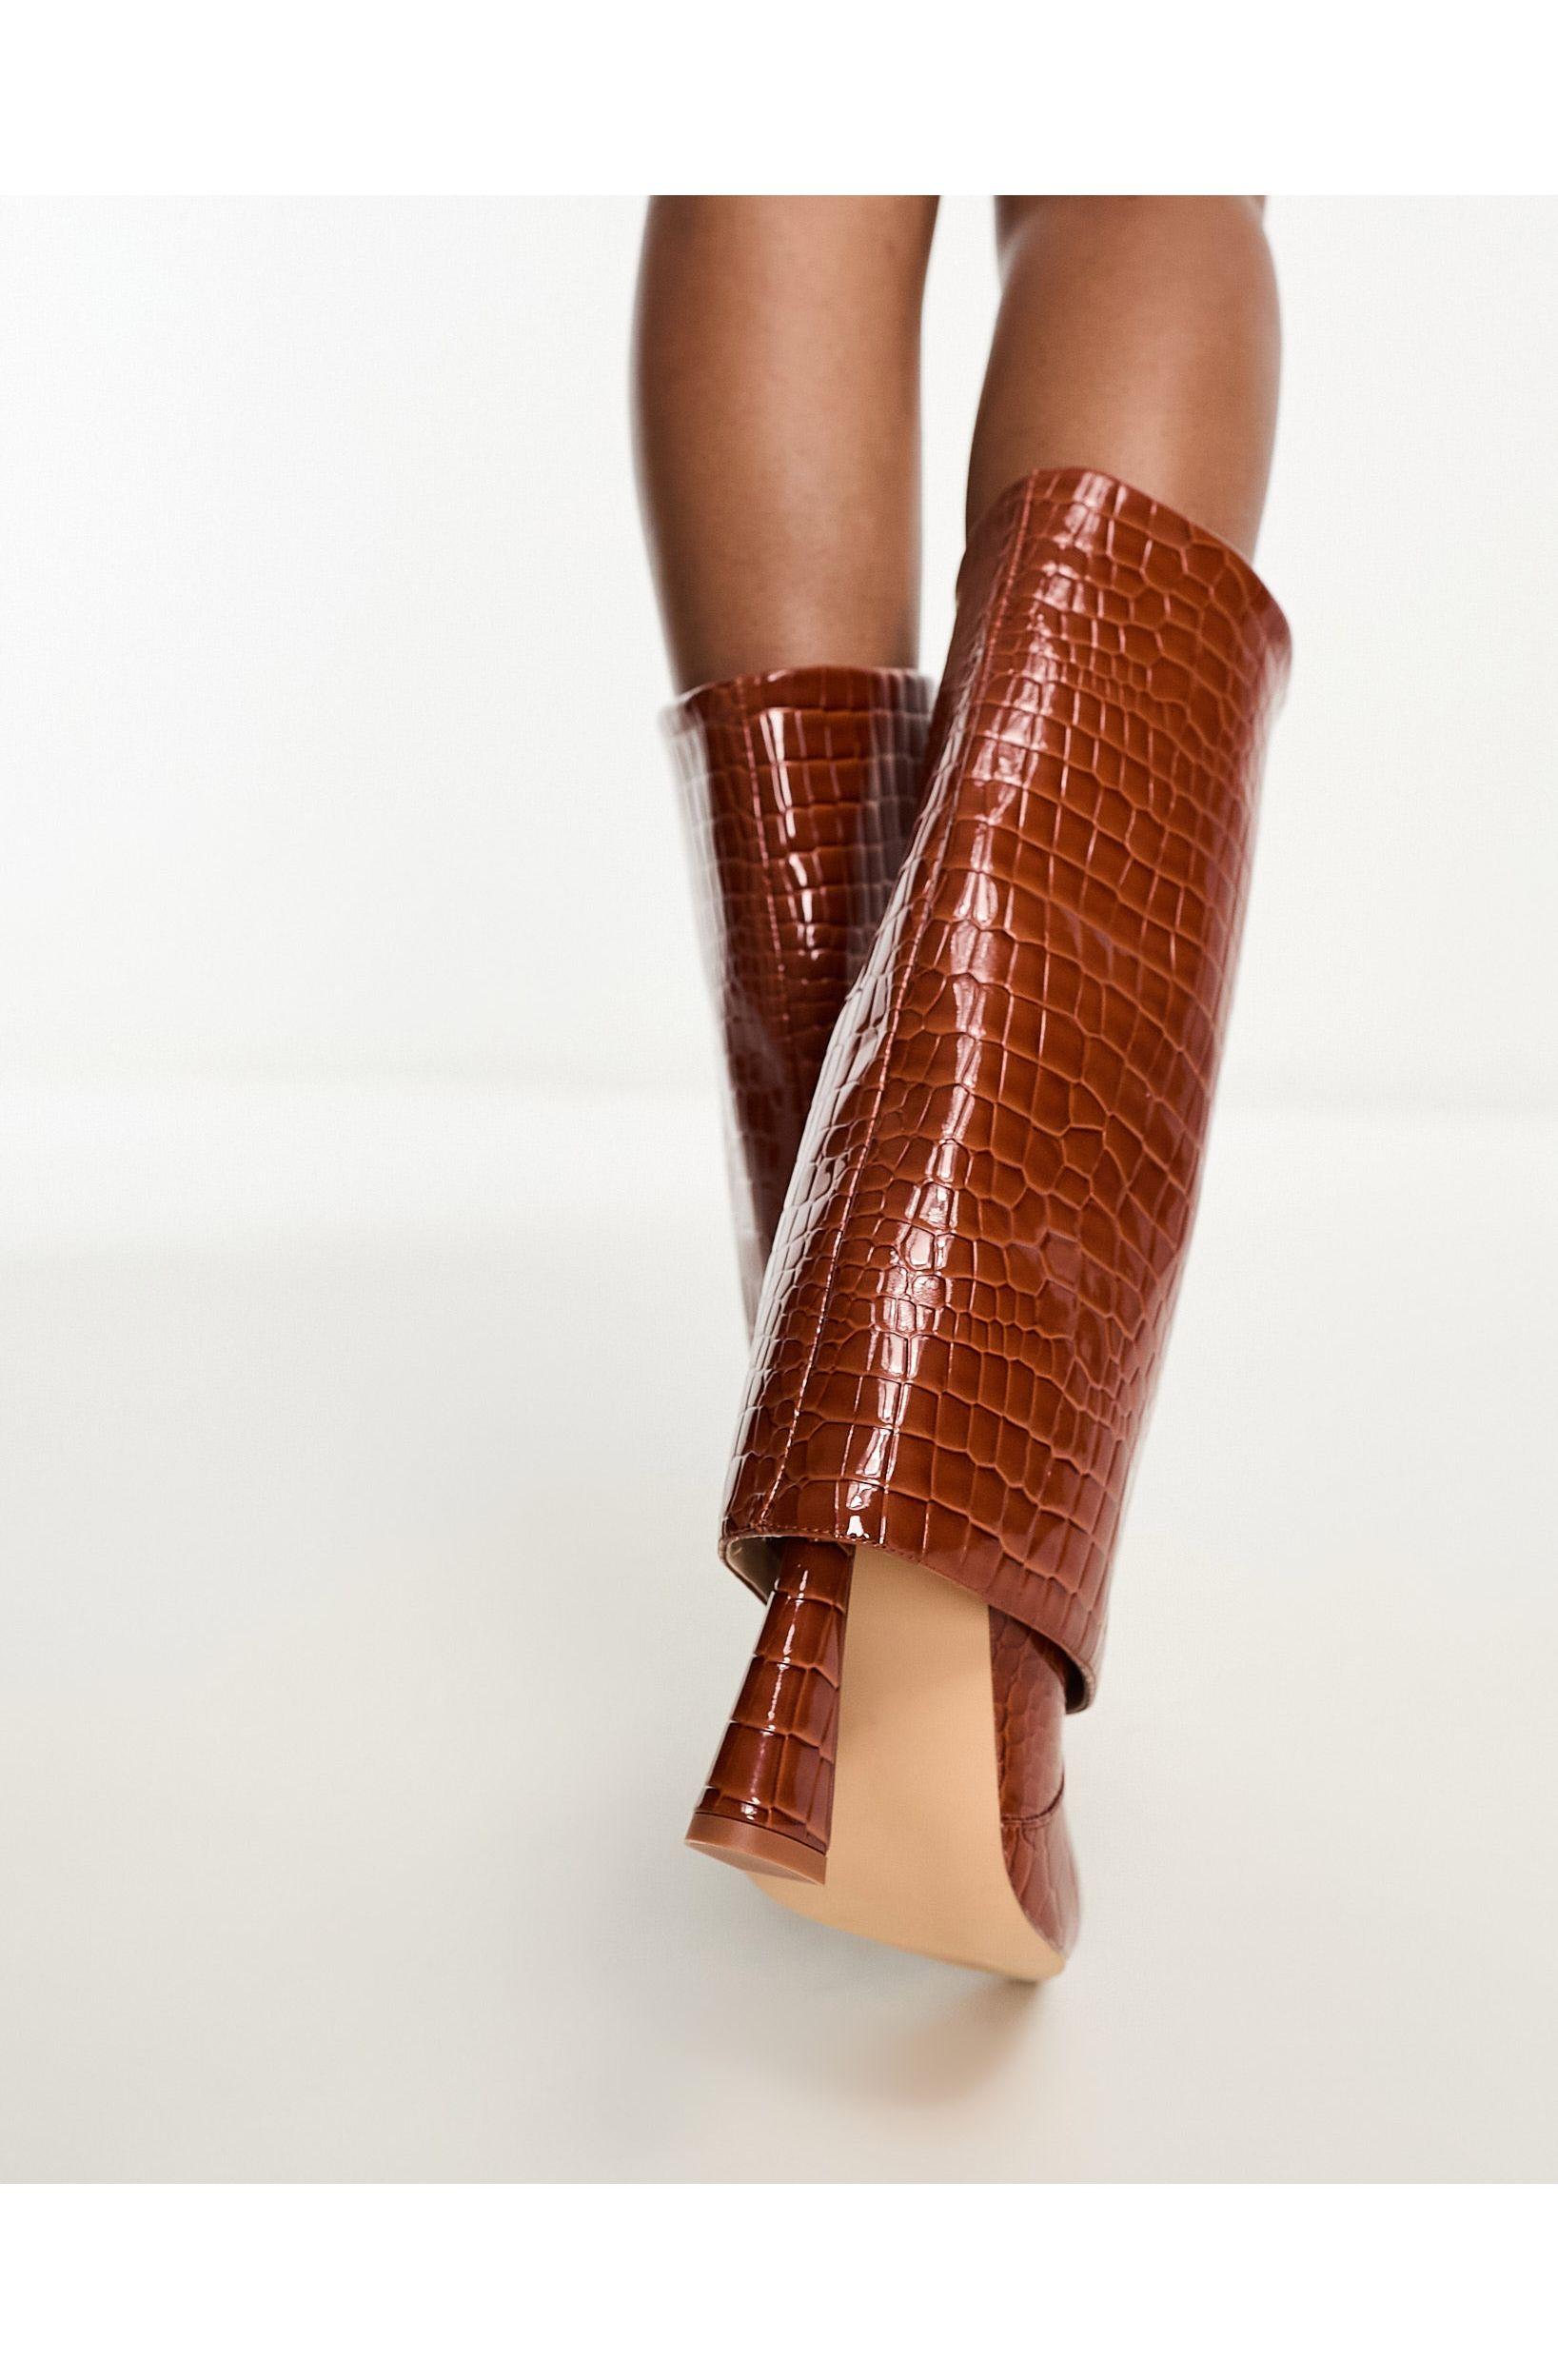 SIMMI Boots for Women | eBay